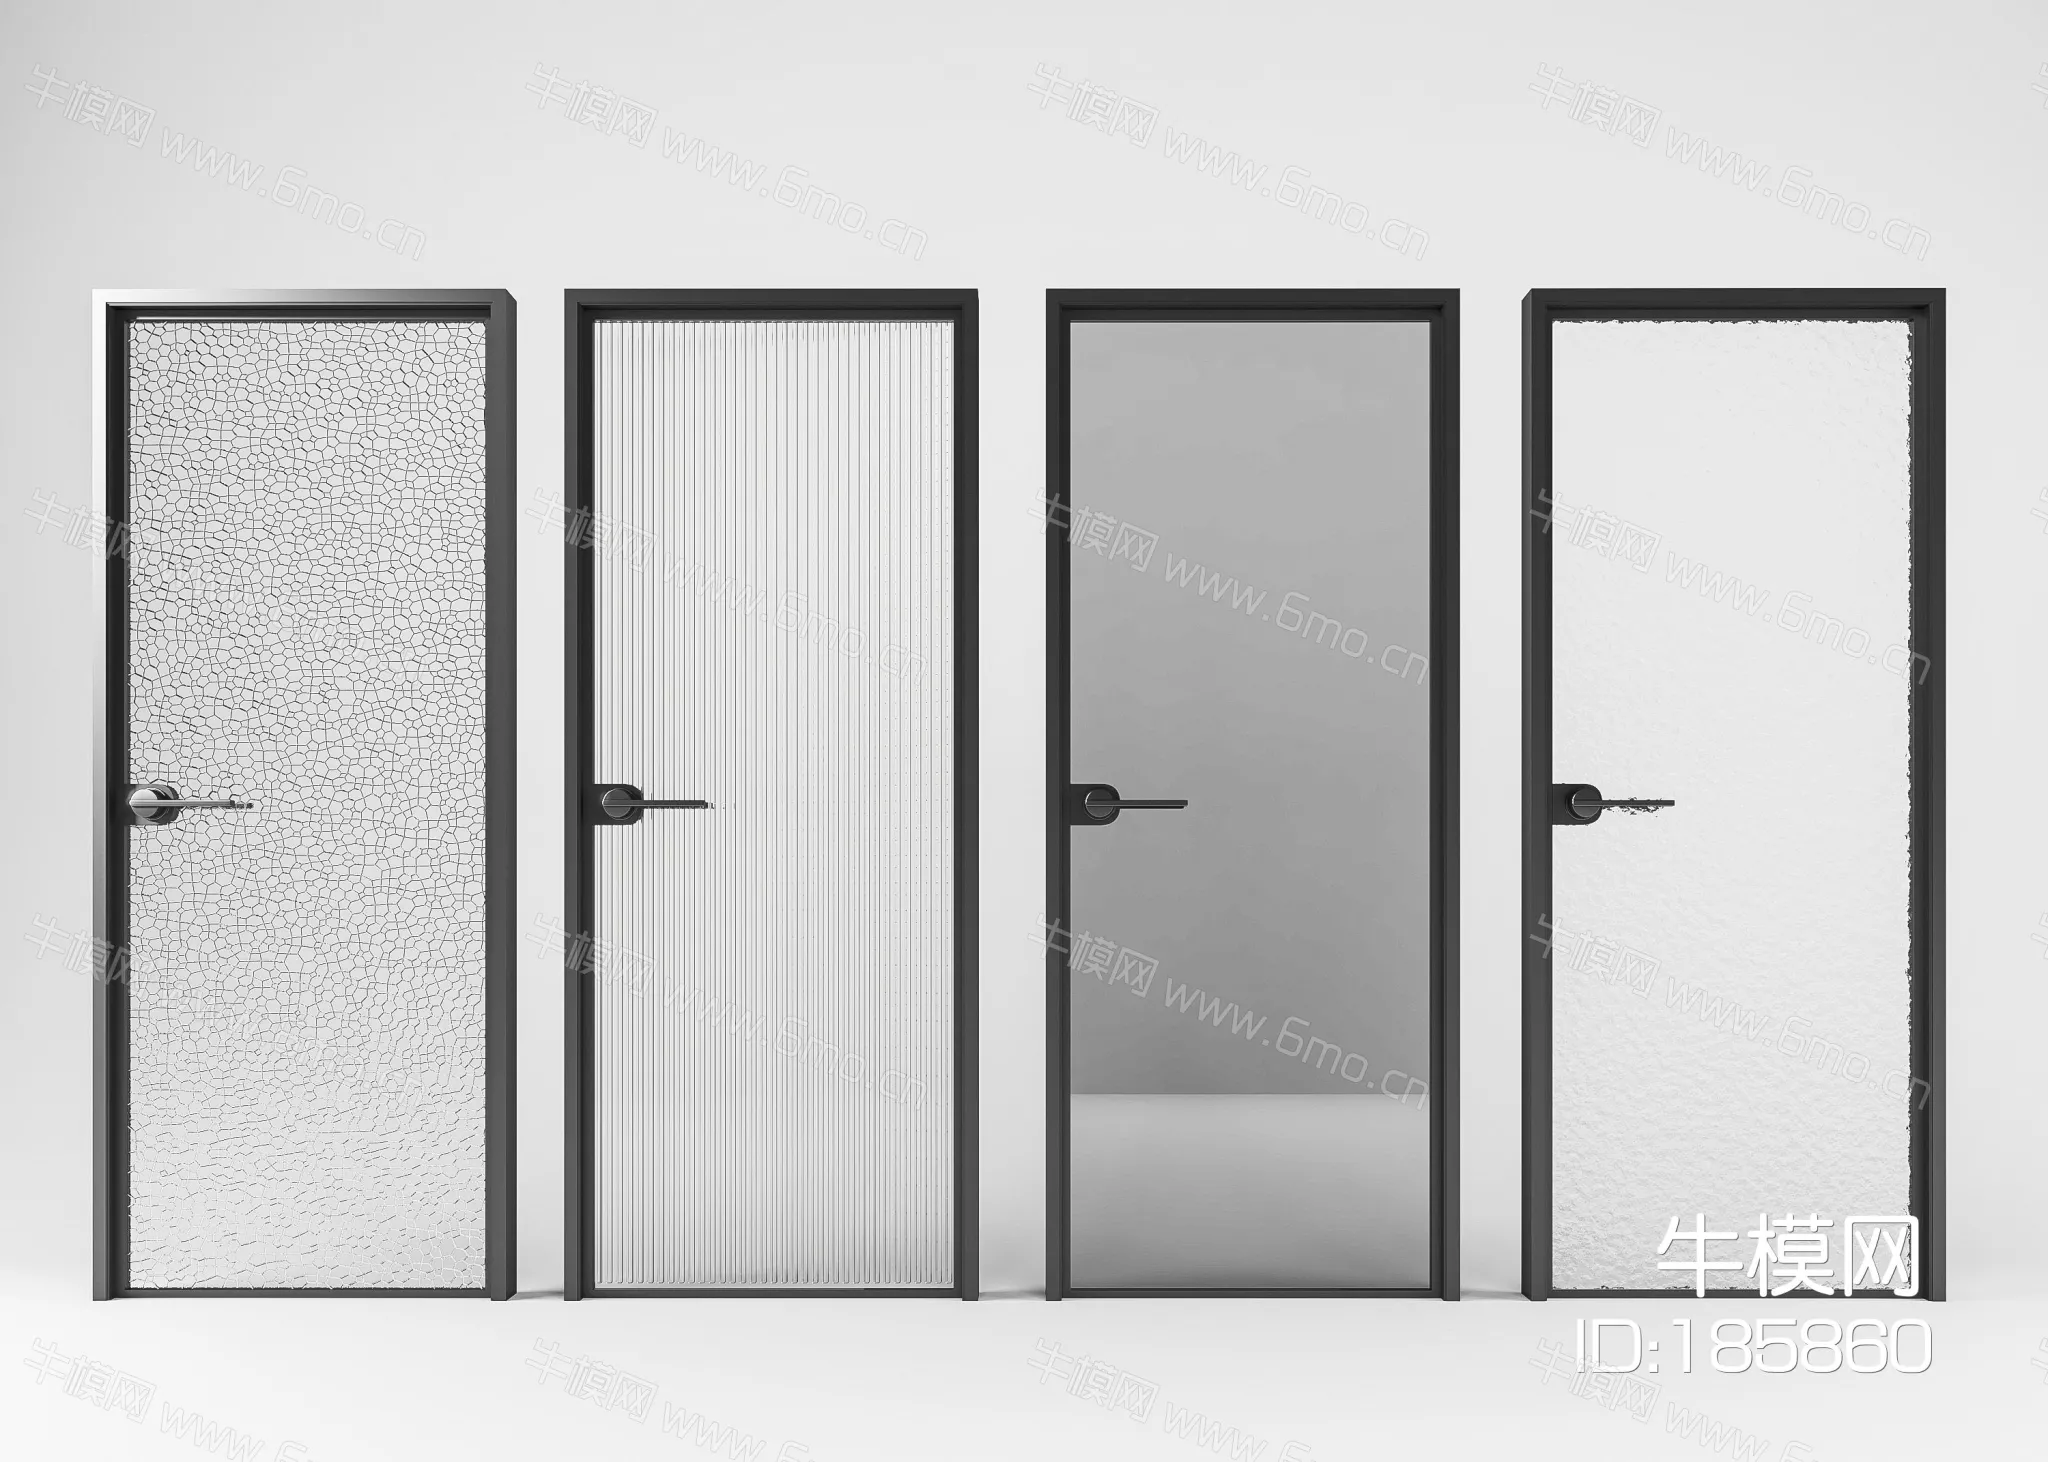 MODERN DOOR AND WINDOWS - SKETCHUP 3D MODEL - ENSCAPE - 185860